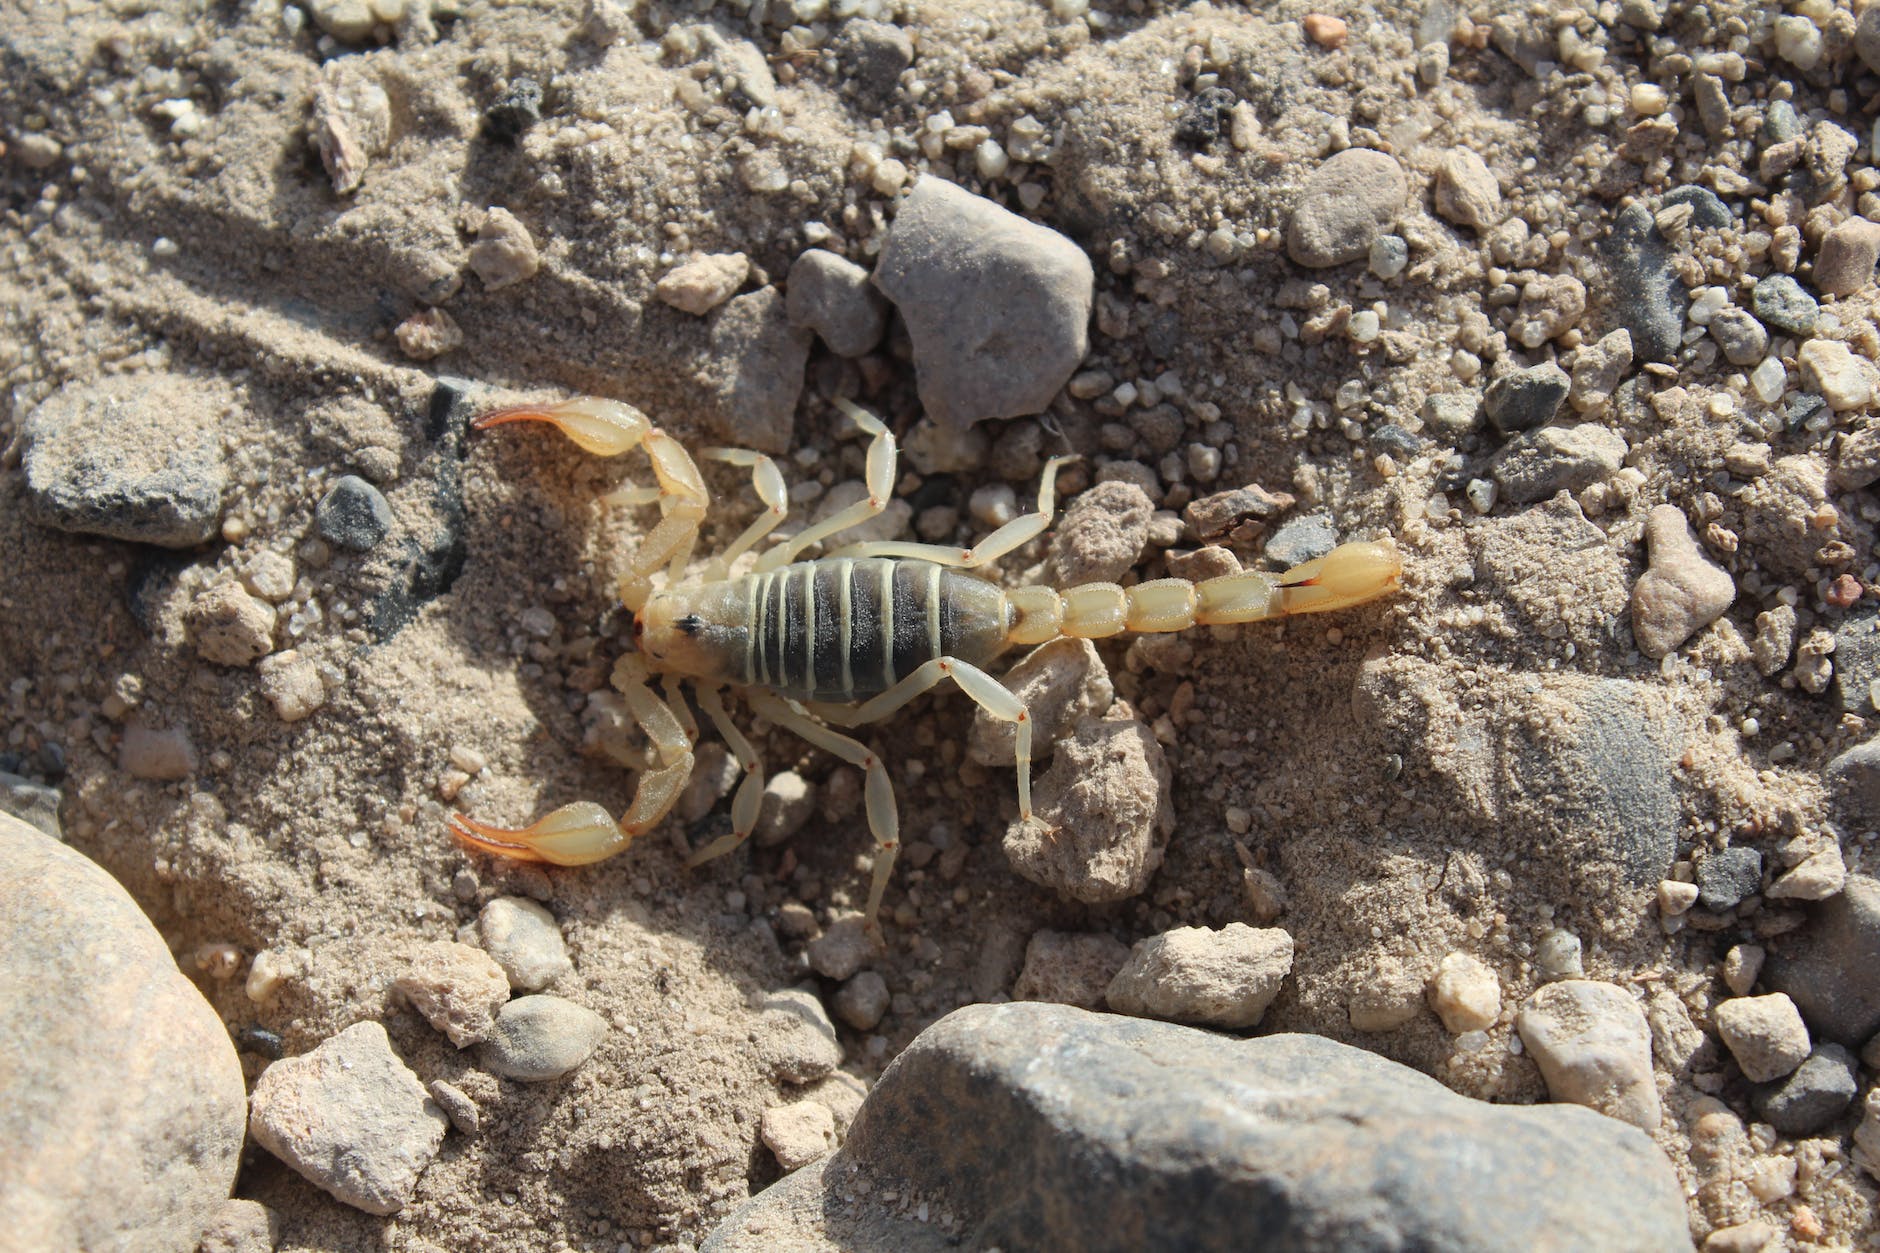 close up shot of a scorpion